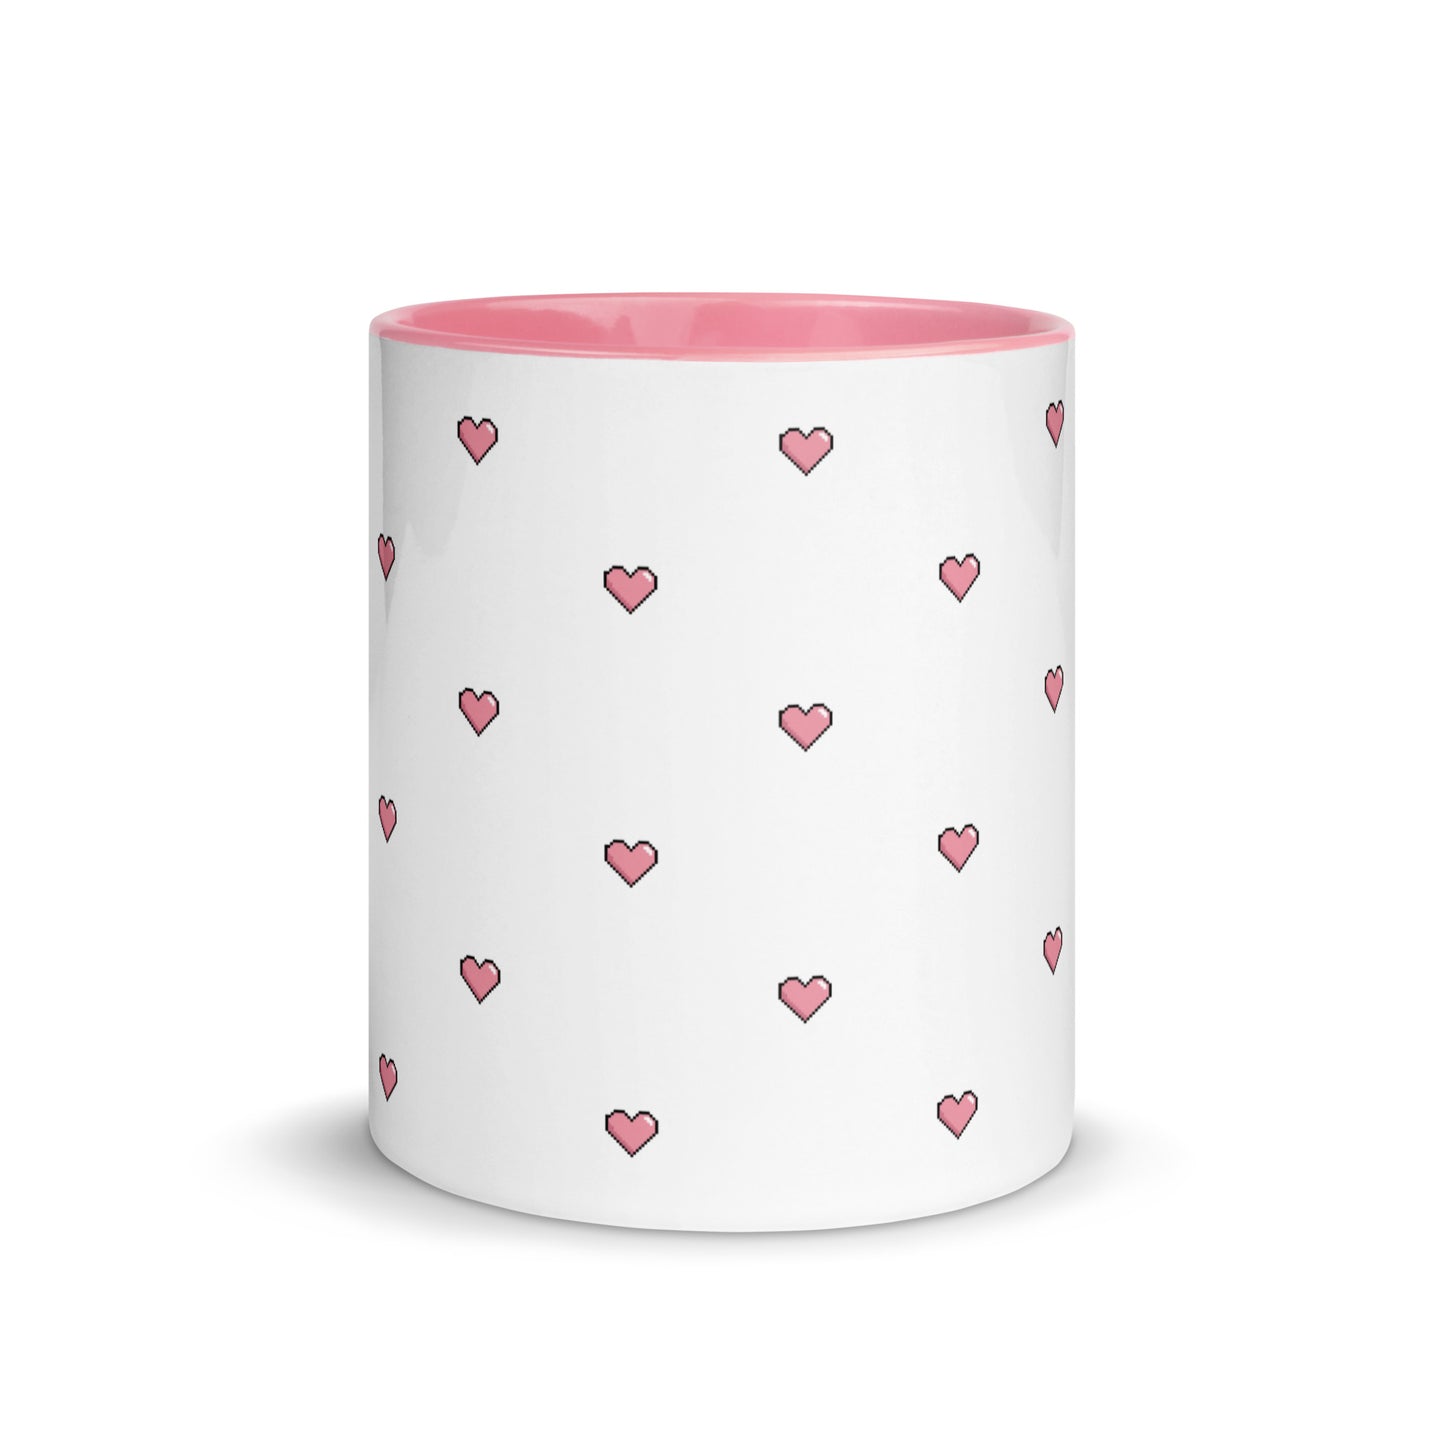 Pink Pixelated Heart Ceramic Mug